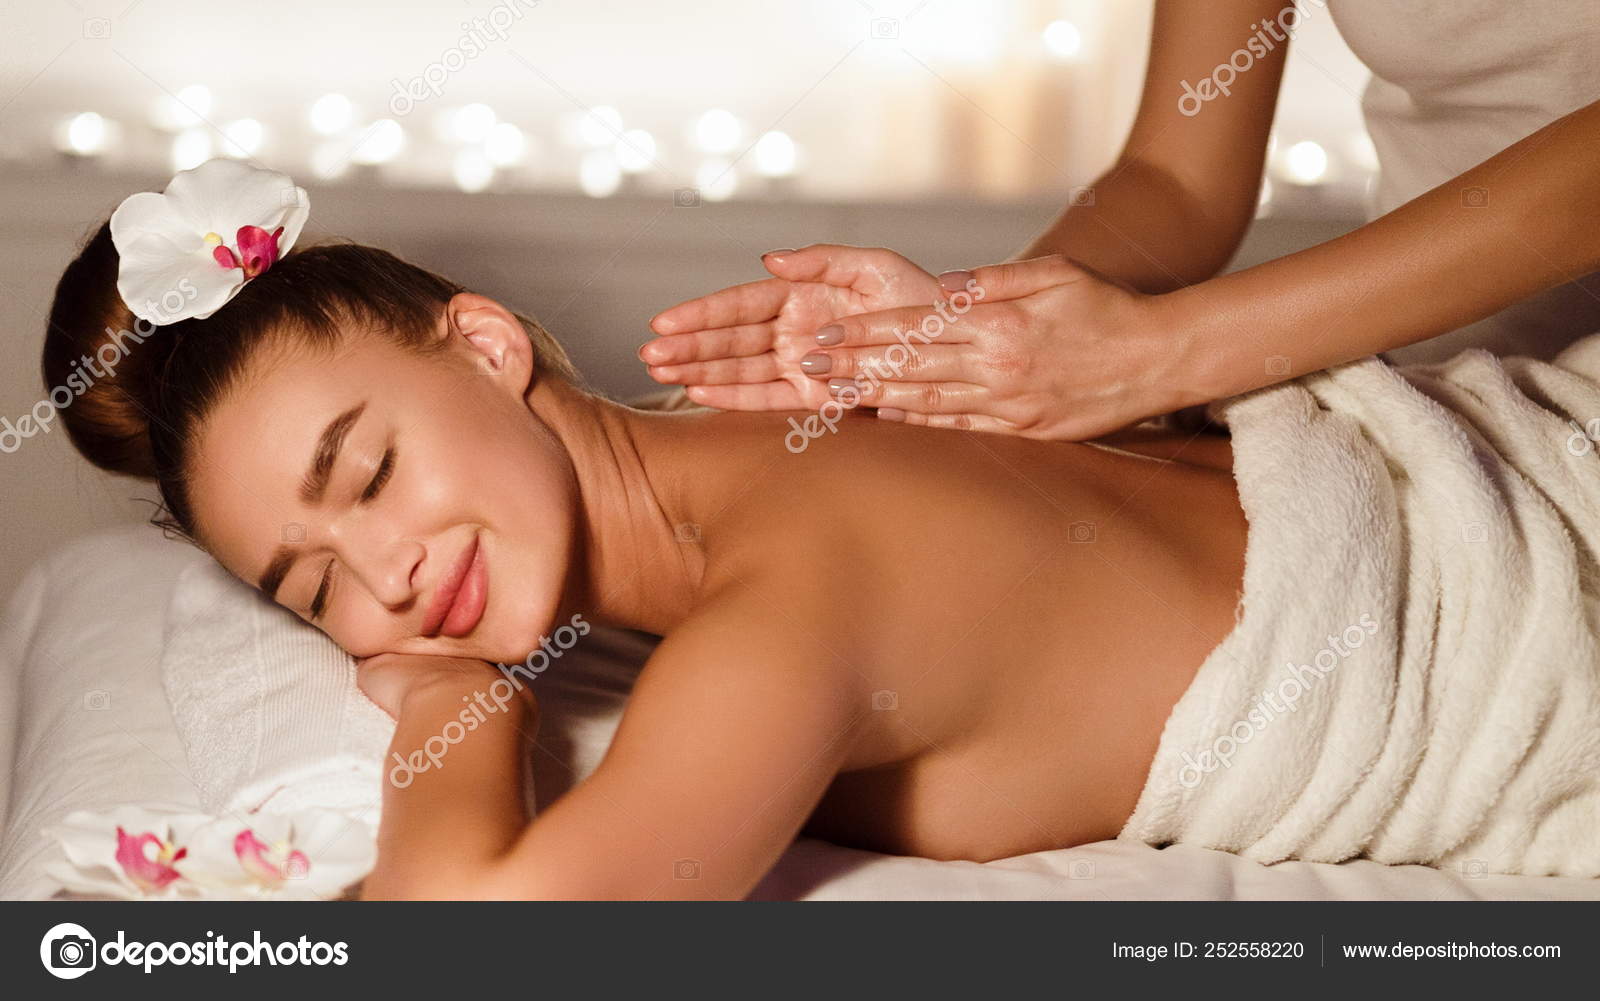 https://st4.depositphotos.com/4218696/25255/i/1600/depositphotos_252558220-stock-photo-body-care-woman-enjoying-relaxing.jpg